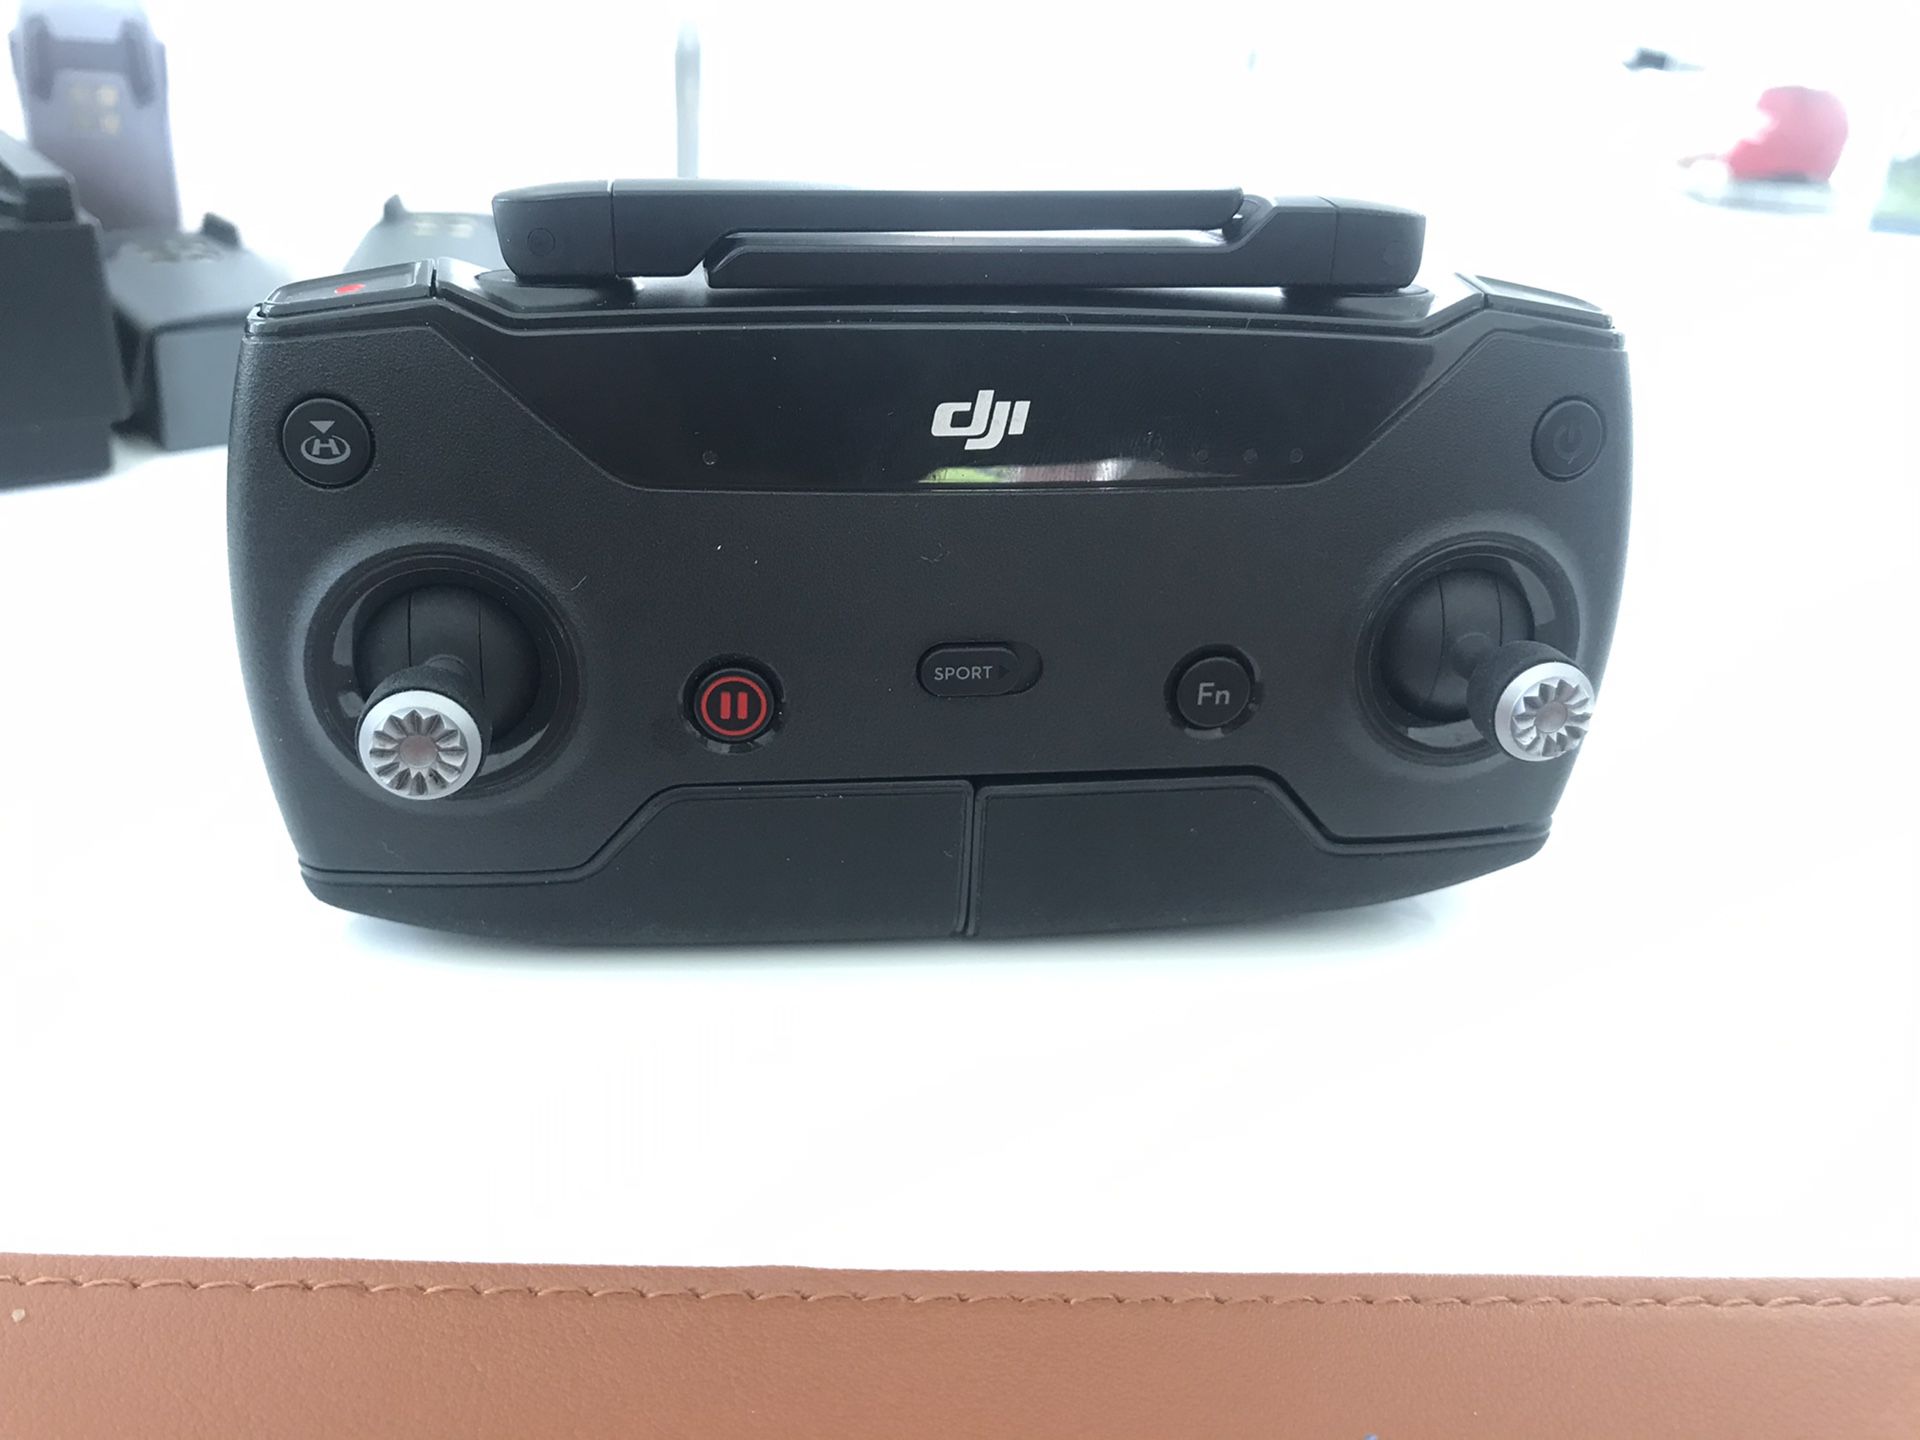 DJI SPARK controller. Fully functional.